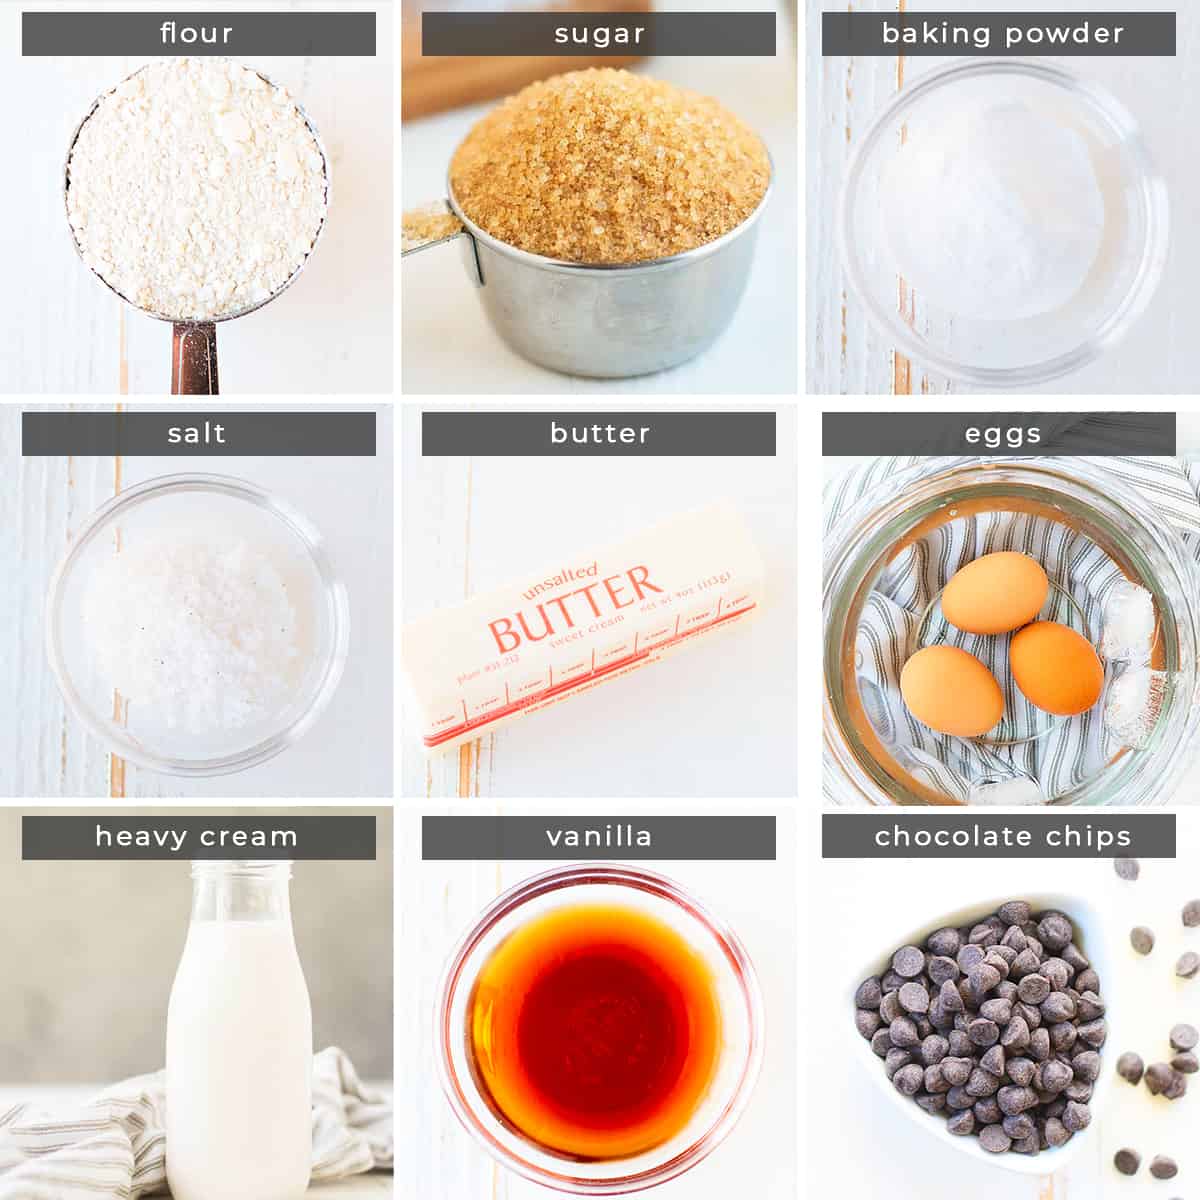 Image containing recipe ingredients flour, sugar, baking powder, salt, butter, eggs, heavy cream, vanilla, and chocolate chips.